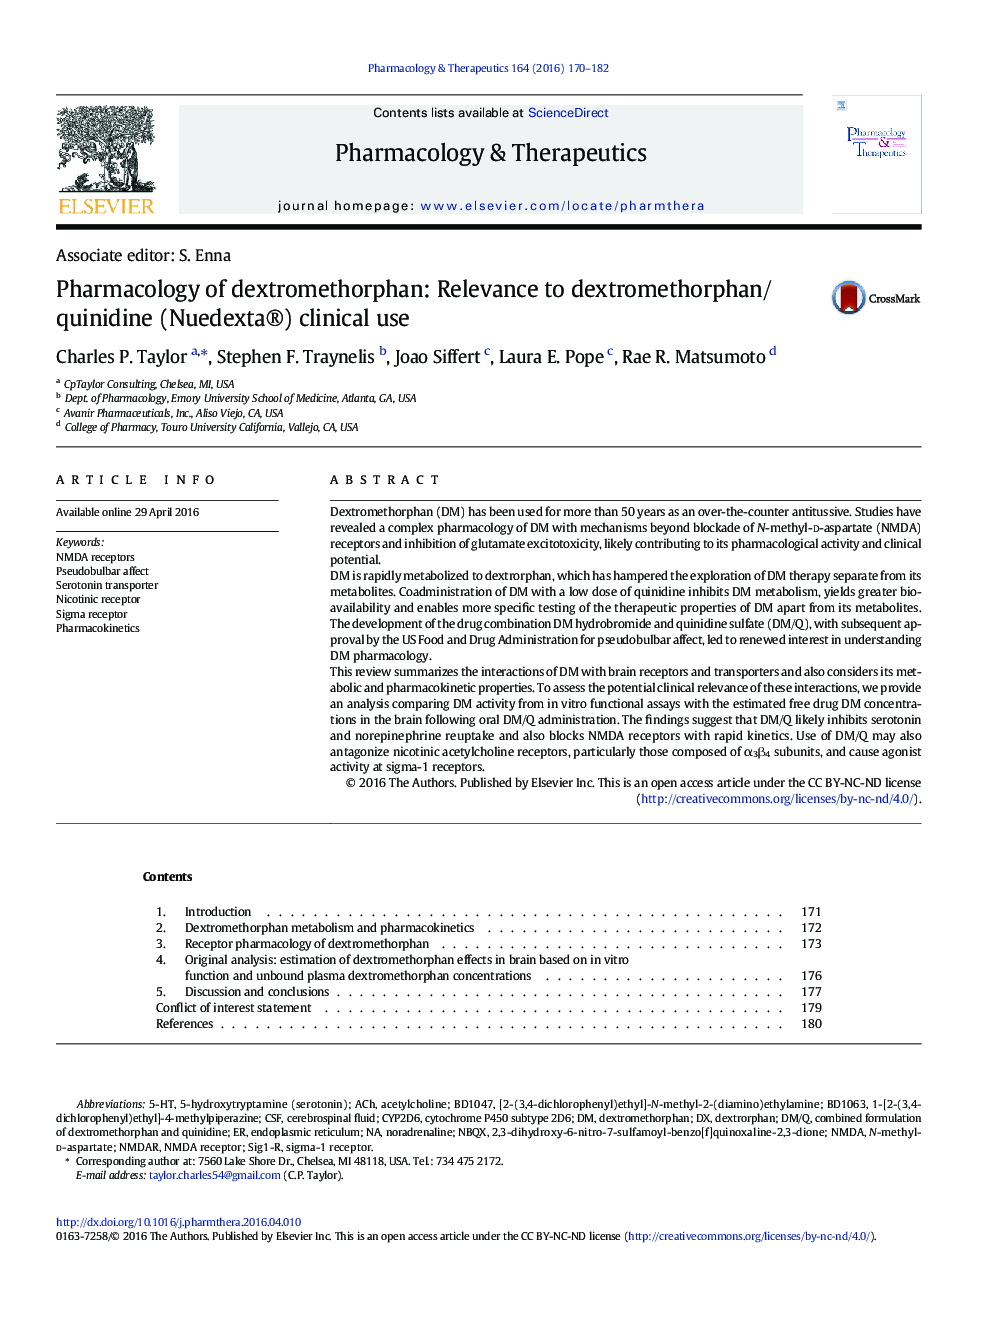 Associate editor: S. EnnaPharmacology of dextromethorphan: Relevance to dextromethorphan/quinidine (Nuedexta®) clinical use